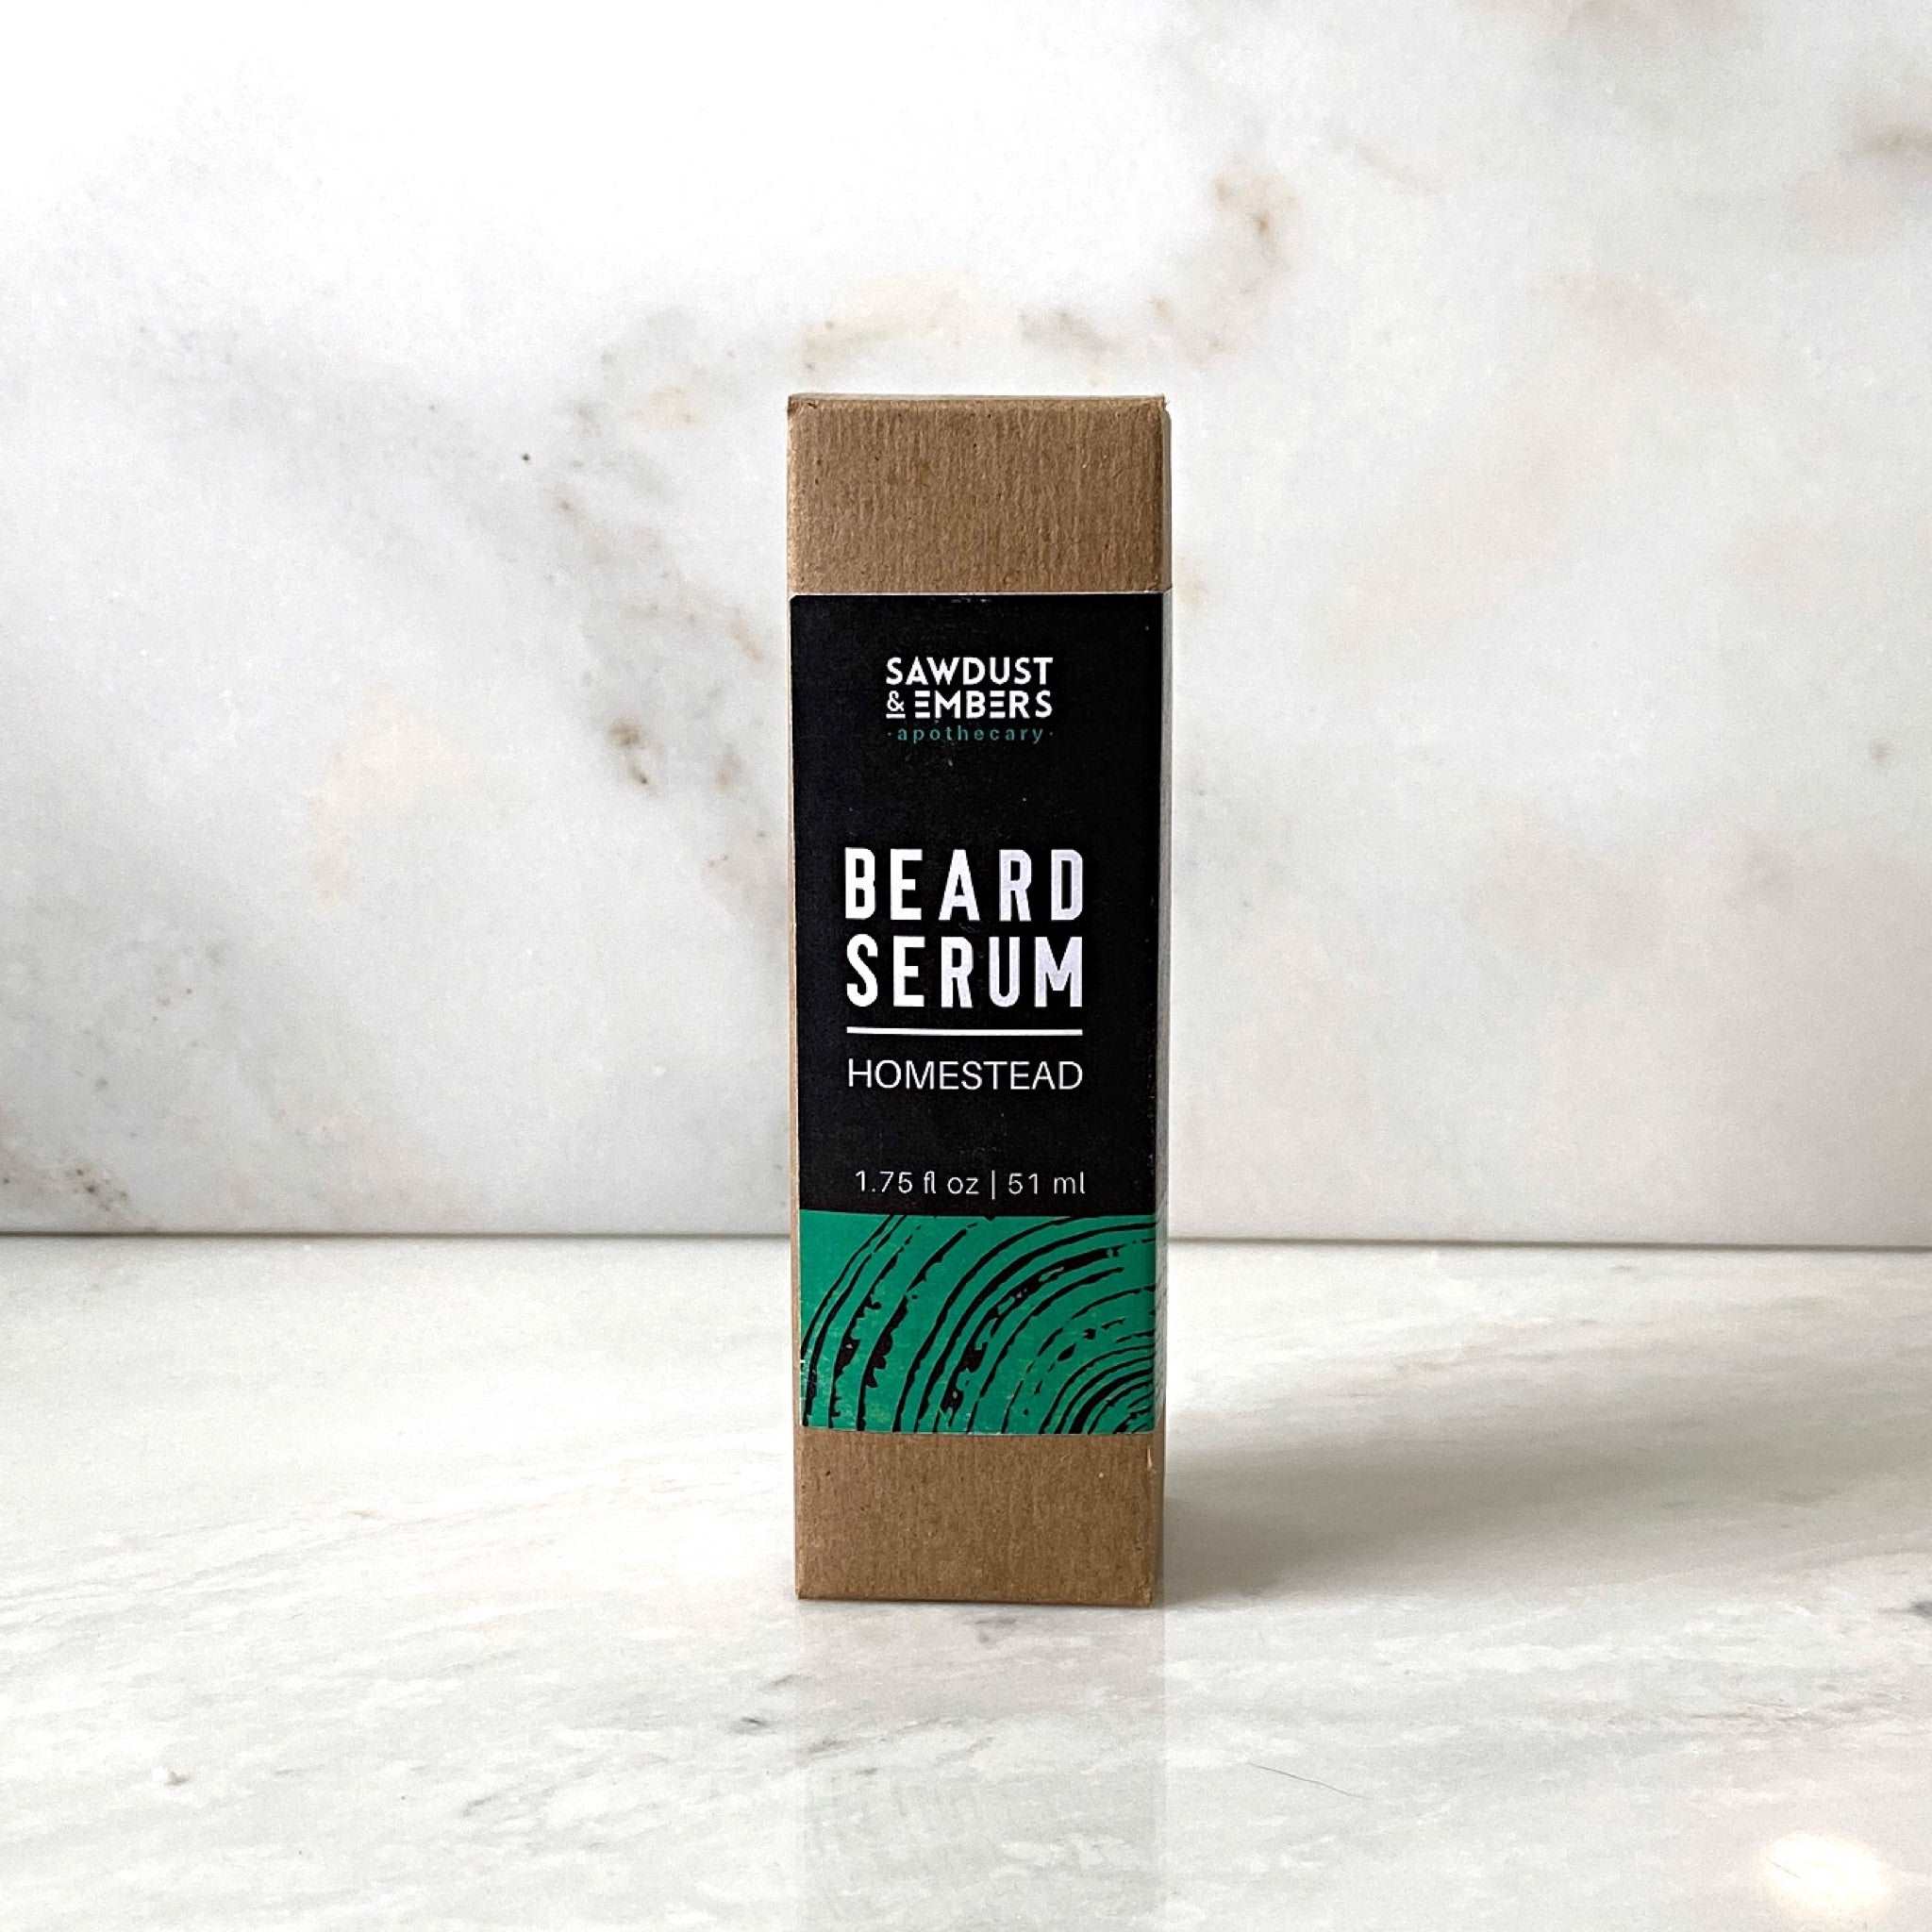 Sawdust & Embers Beard Serum Homestead - 2 OZ Beard Serum